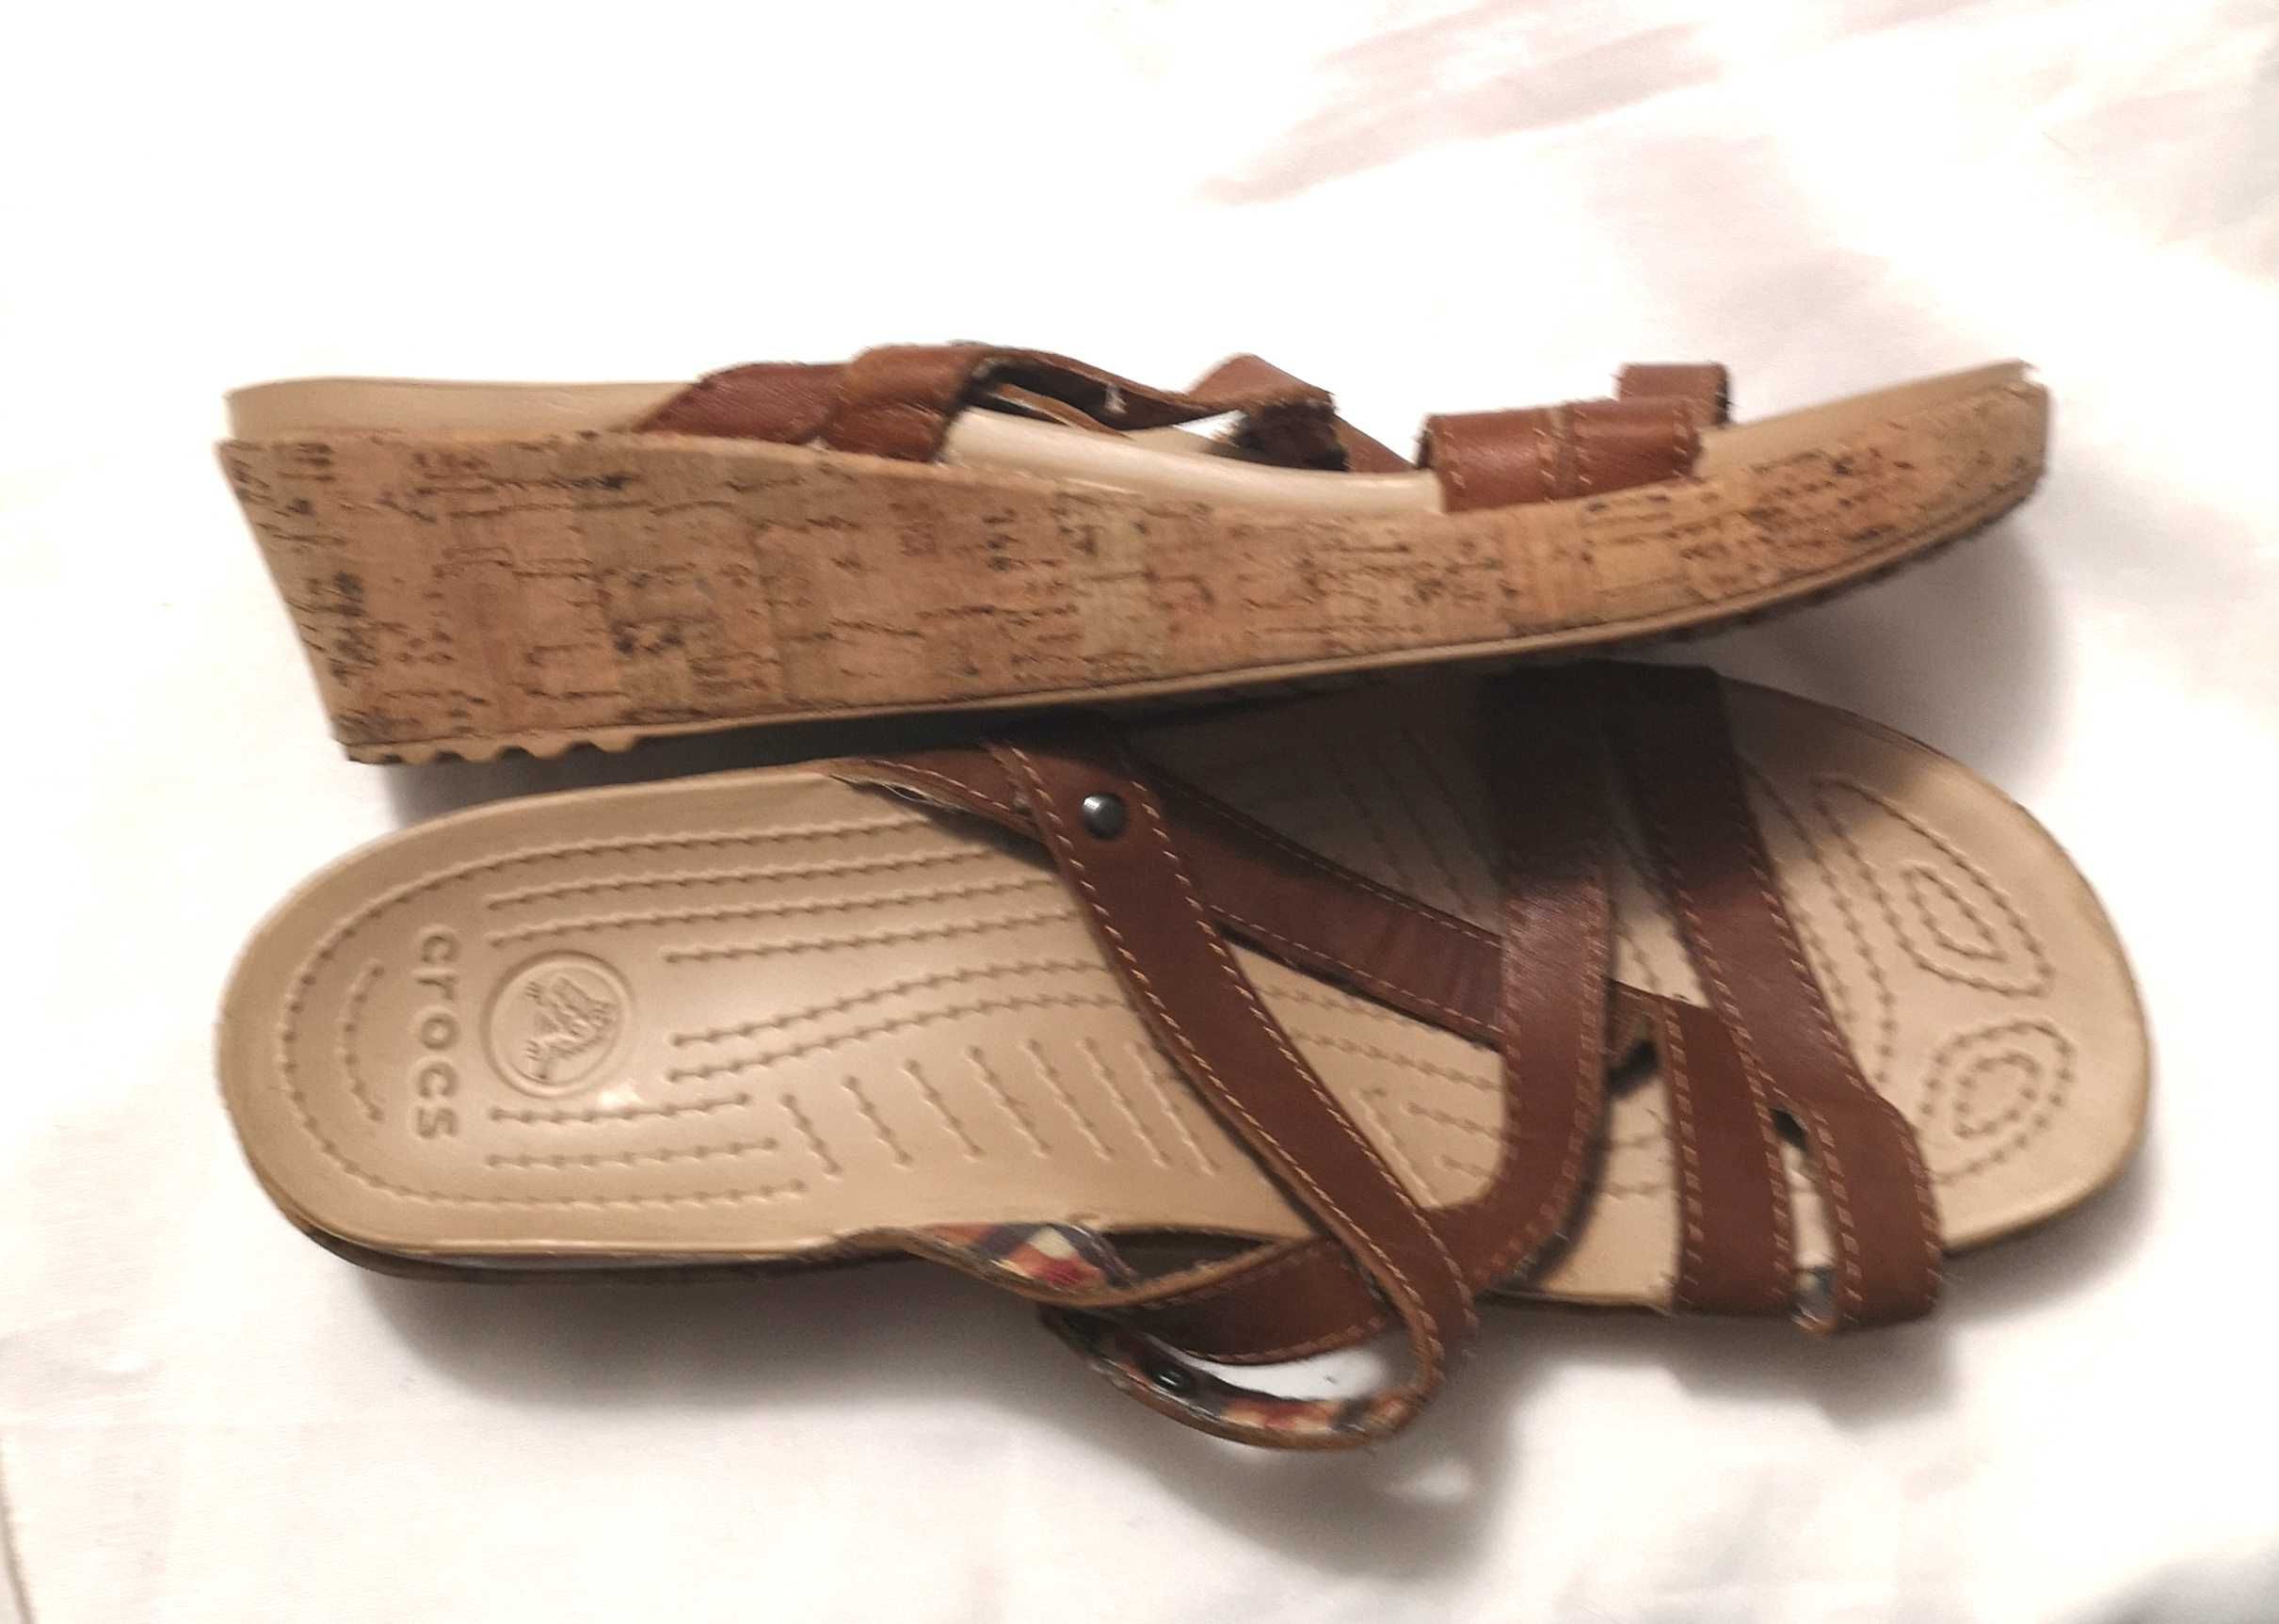 Vand sandale de piele Crocks, maro, marimea 43, purtate o singura data